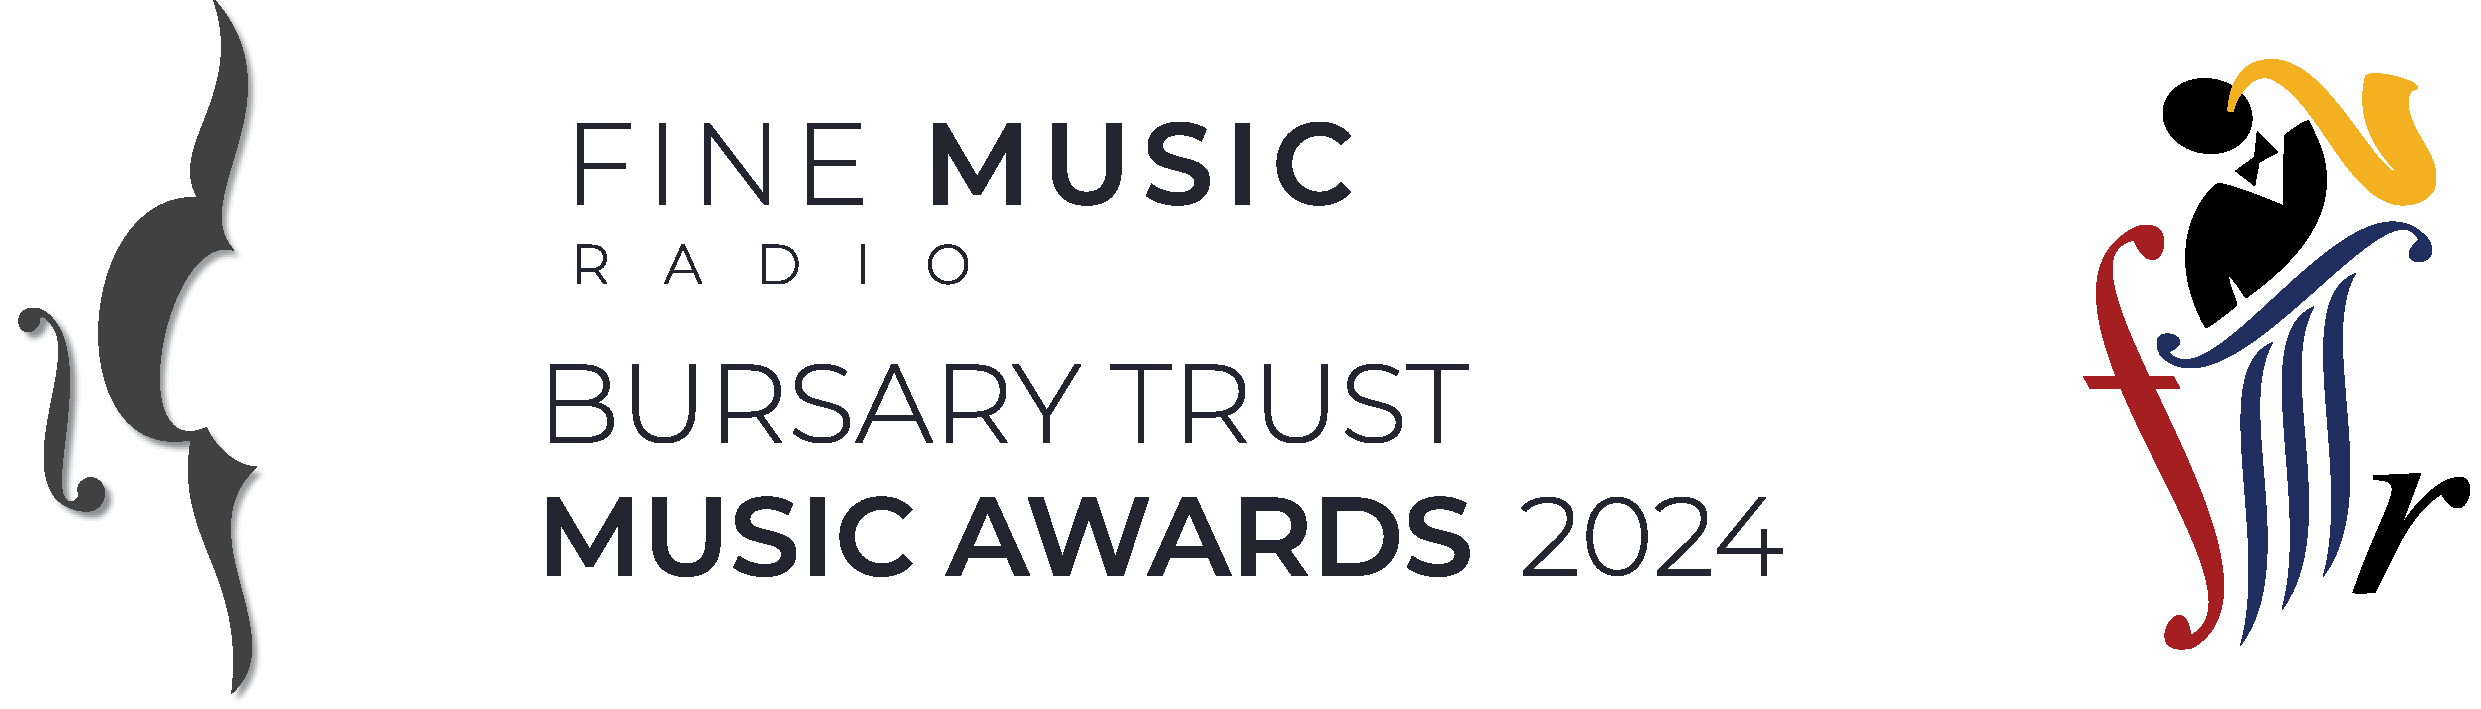 The Fine Music Radio Bursary Competition Trust Awards